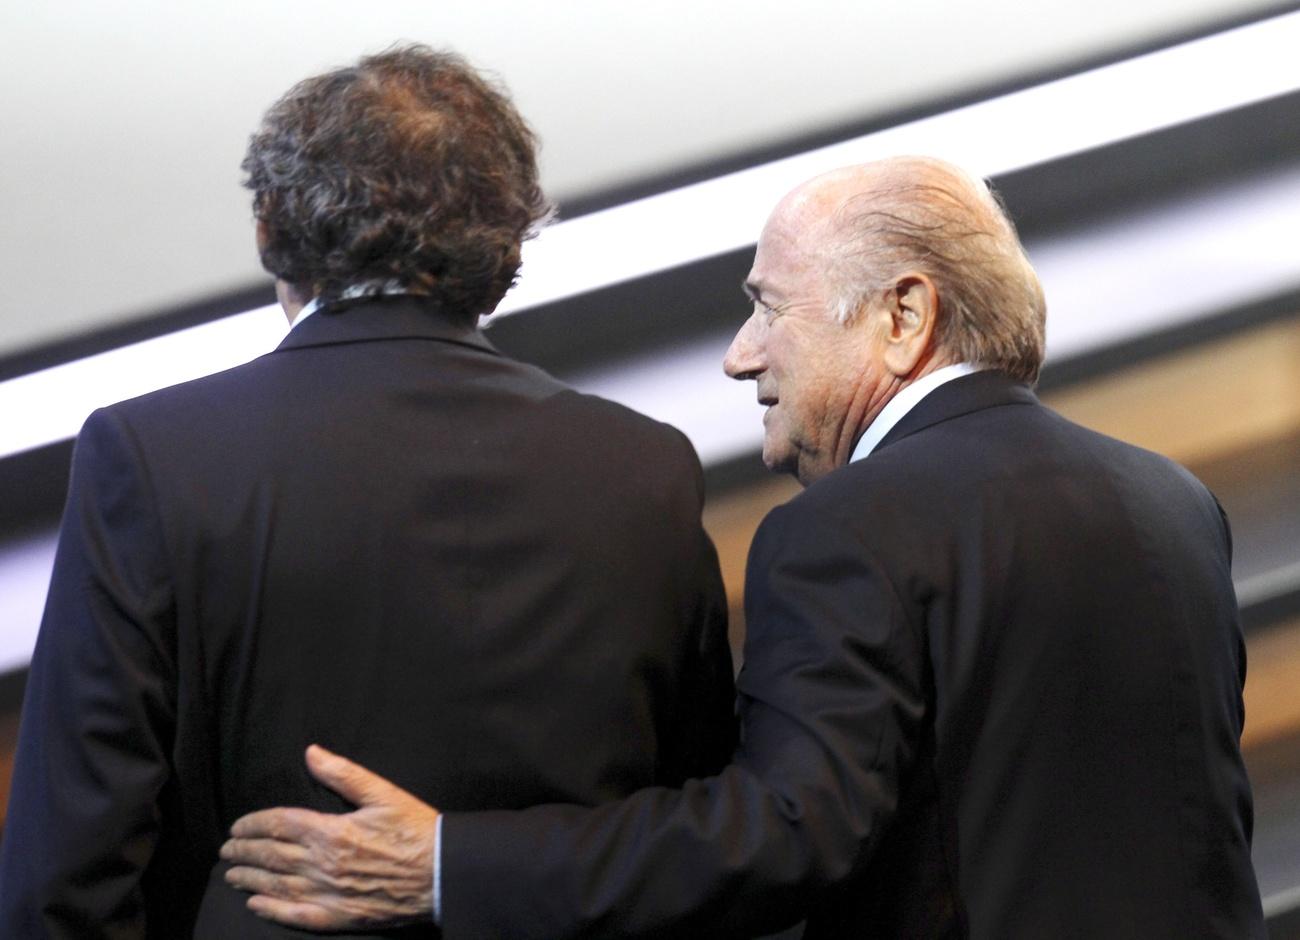 Michel Platini and Sepp Blatter